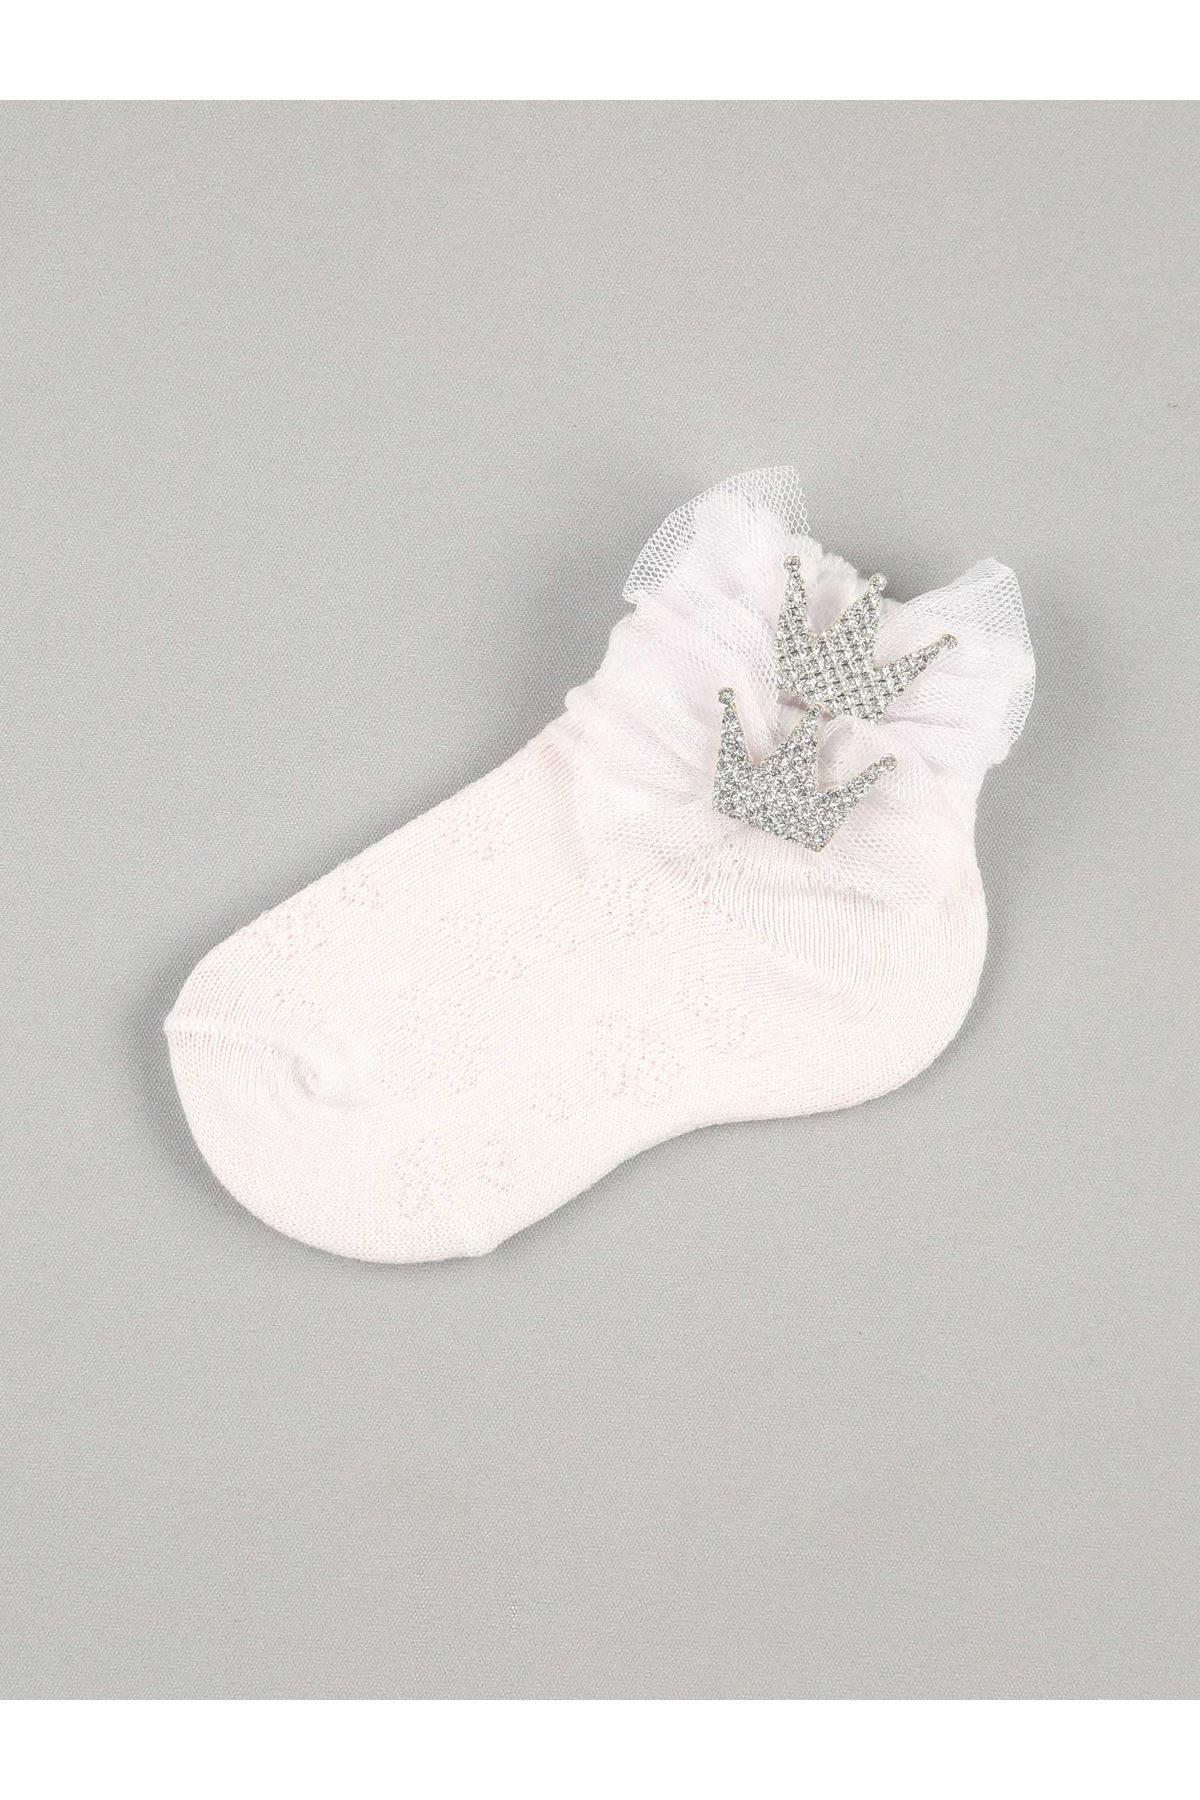 White Bow Crowned Baby Girl Socks